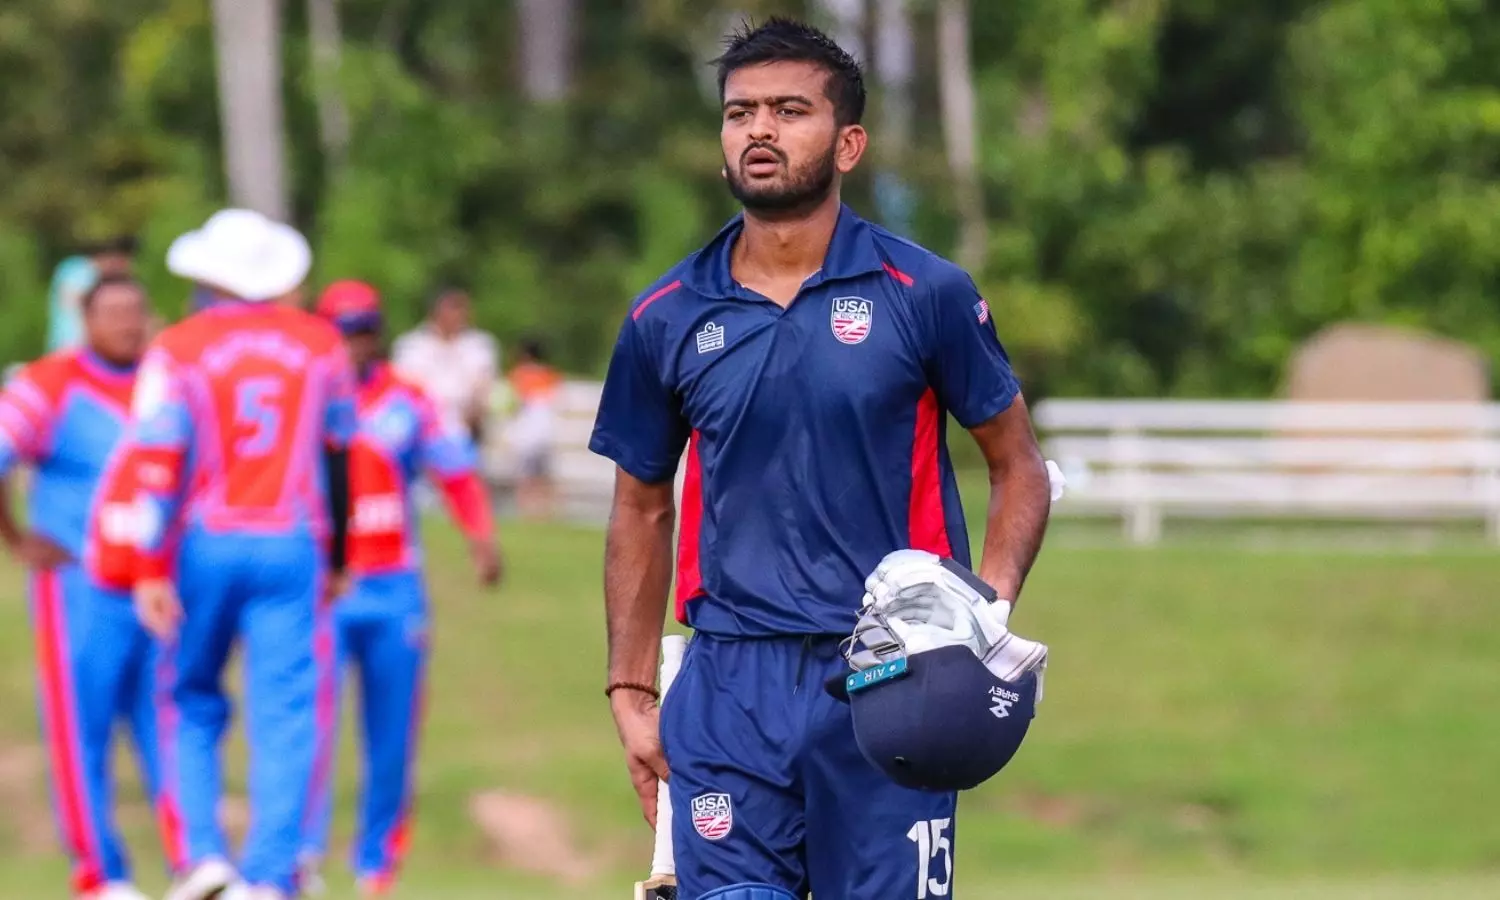 USA's Indian origin cricket captain Monank Patel gets ready for bigger  battles